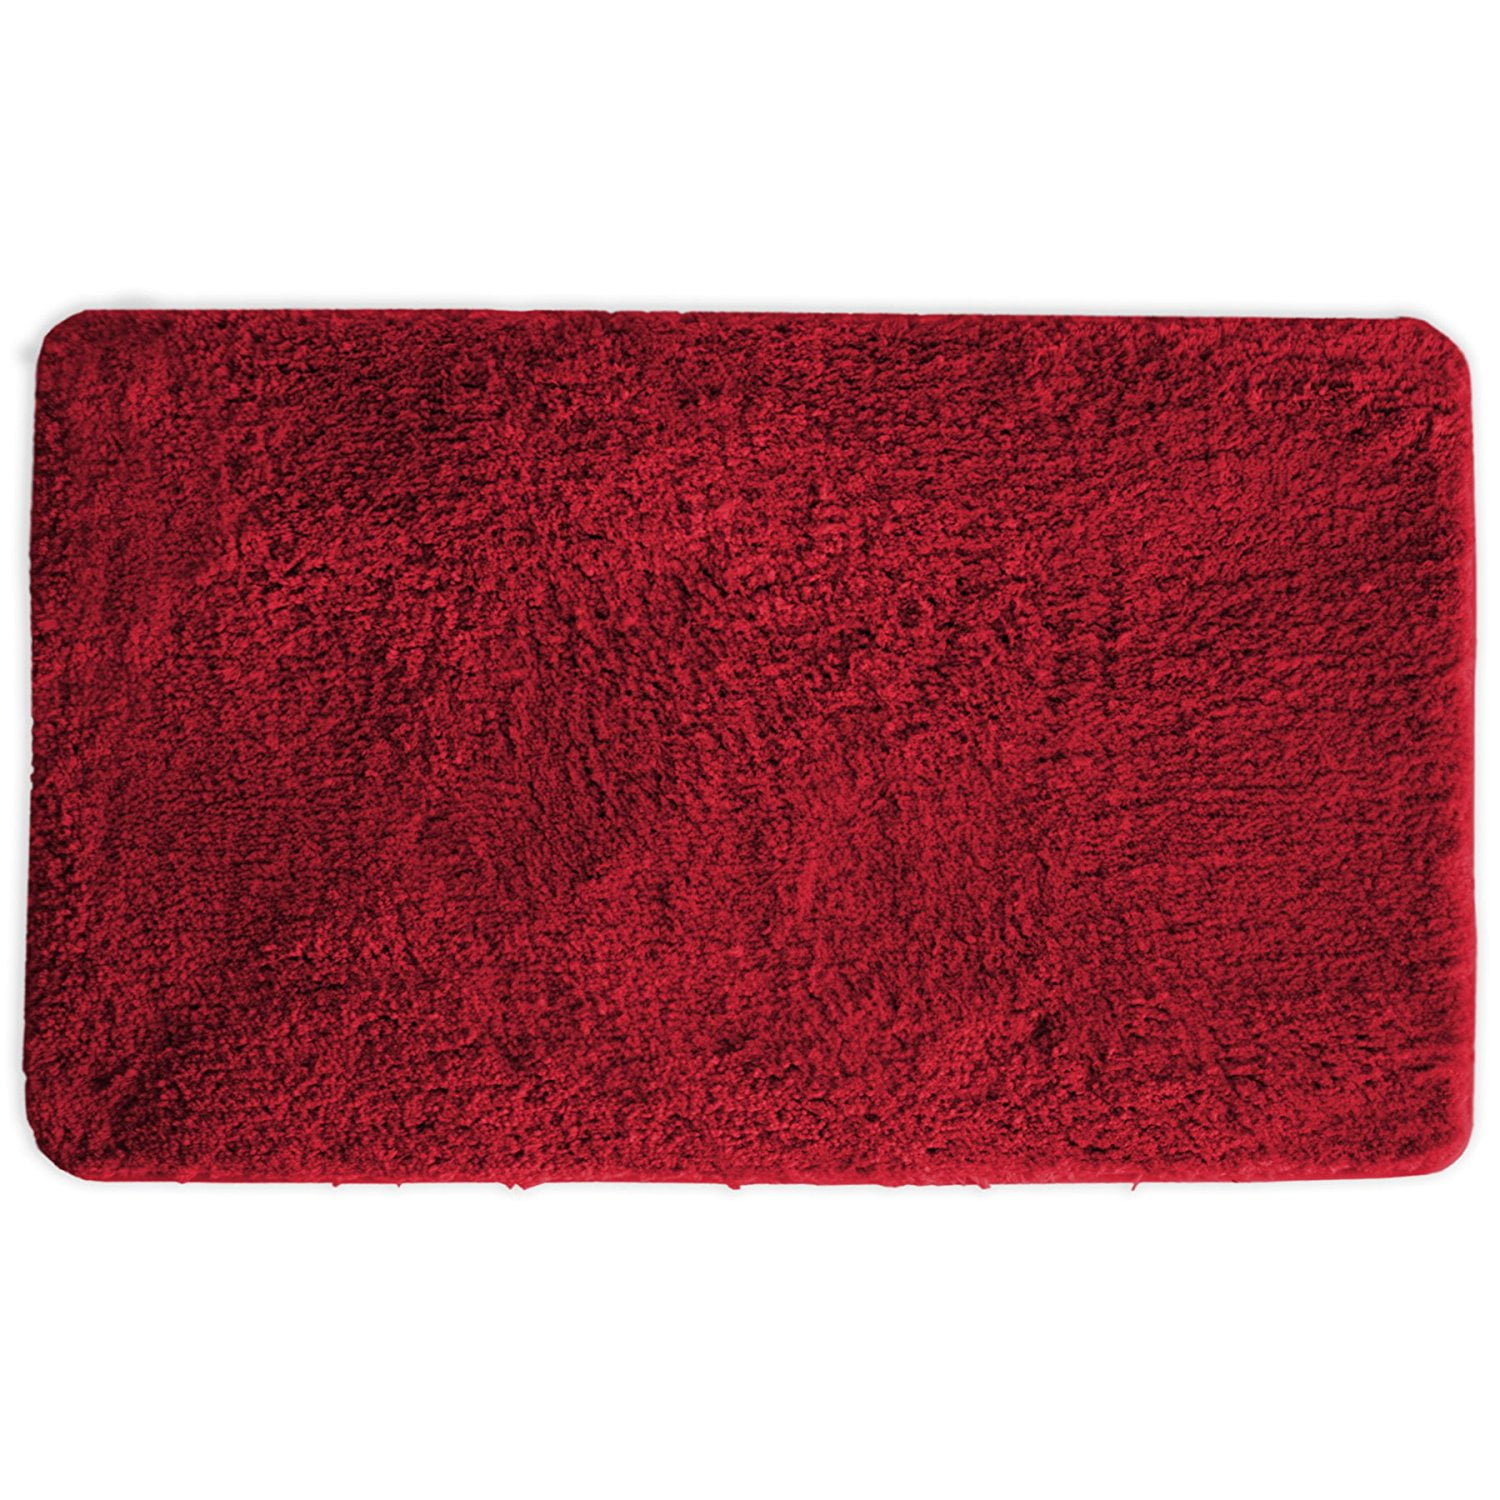 Luxury Soft Plush Shaggy Bath Mat Mary Thick Fluffy Microfiber Bathroom Rug 